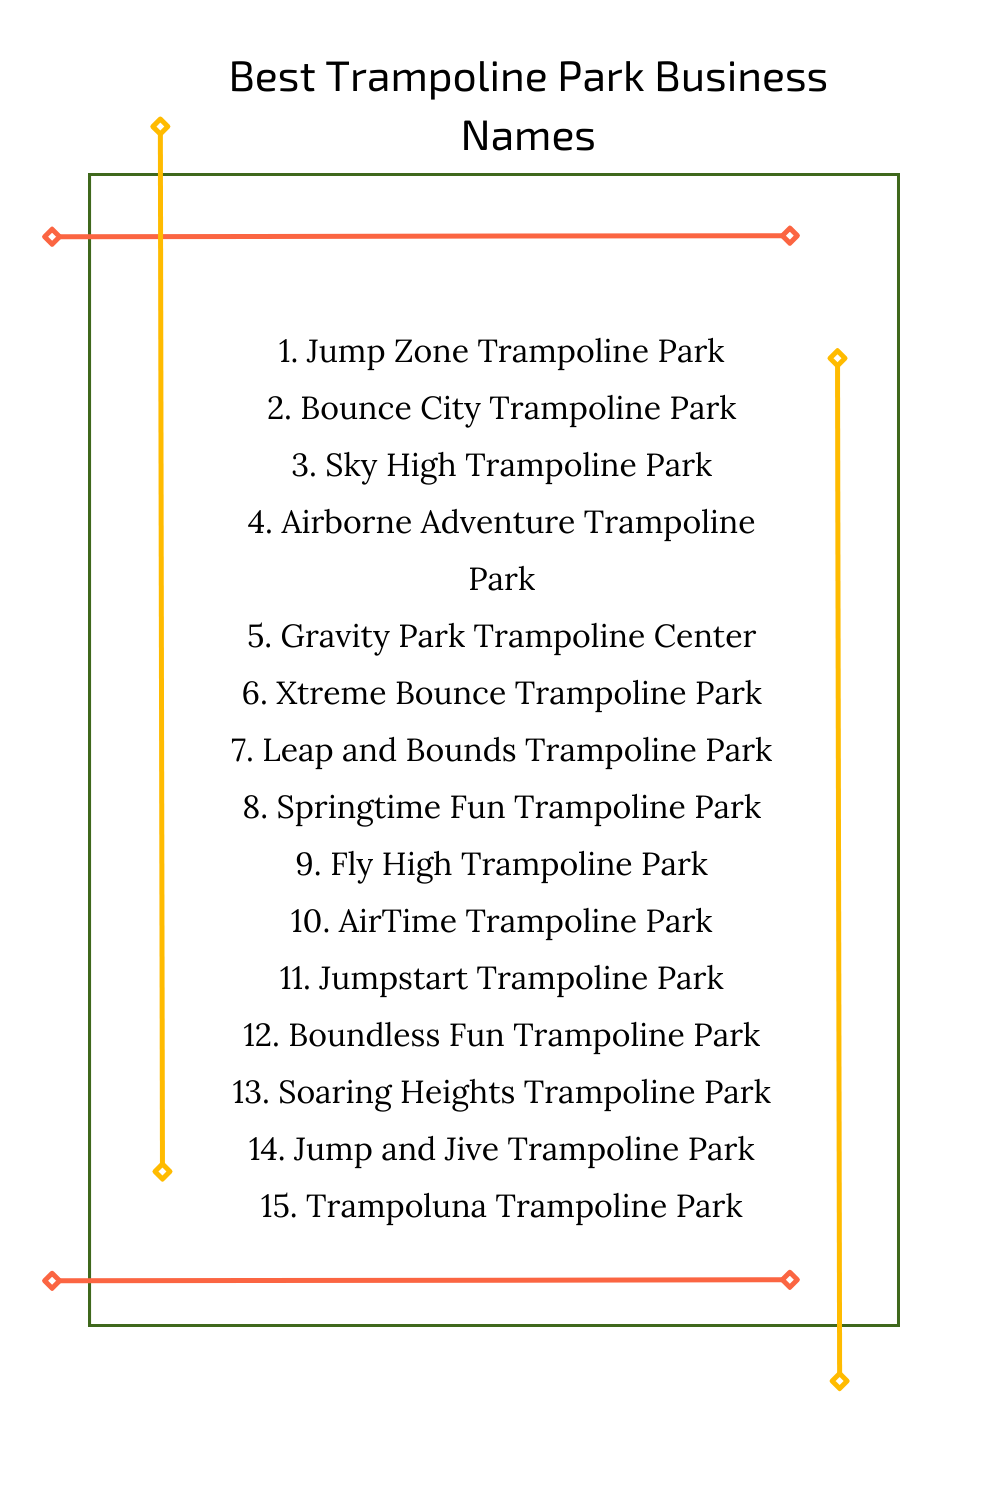 Best Trampoline Park Business Names